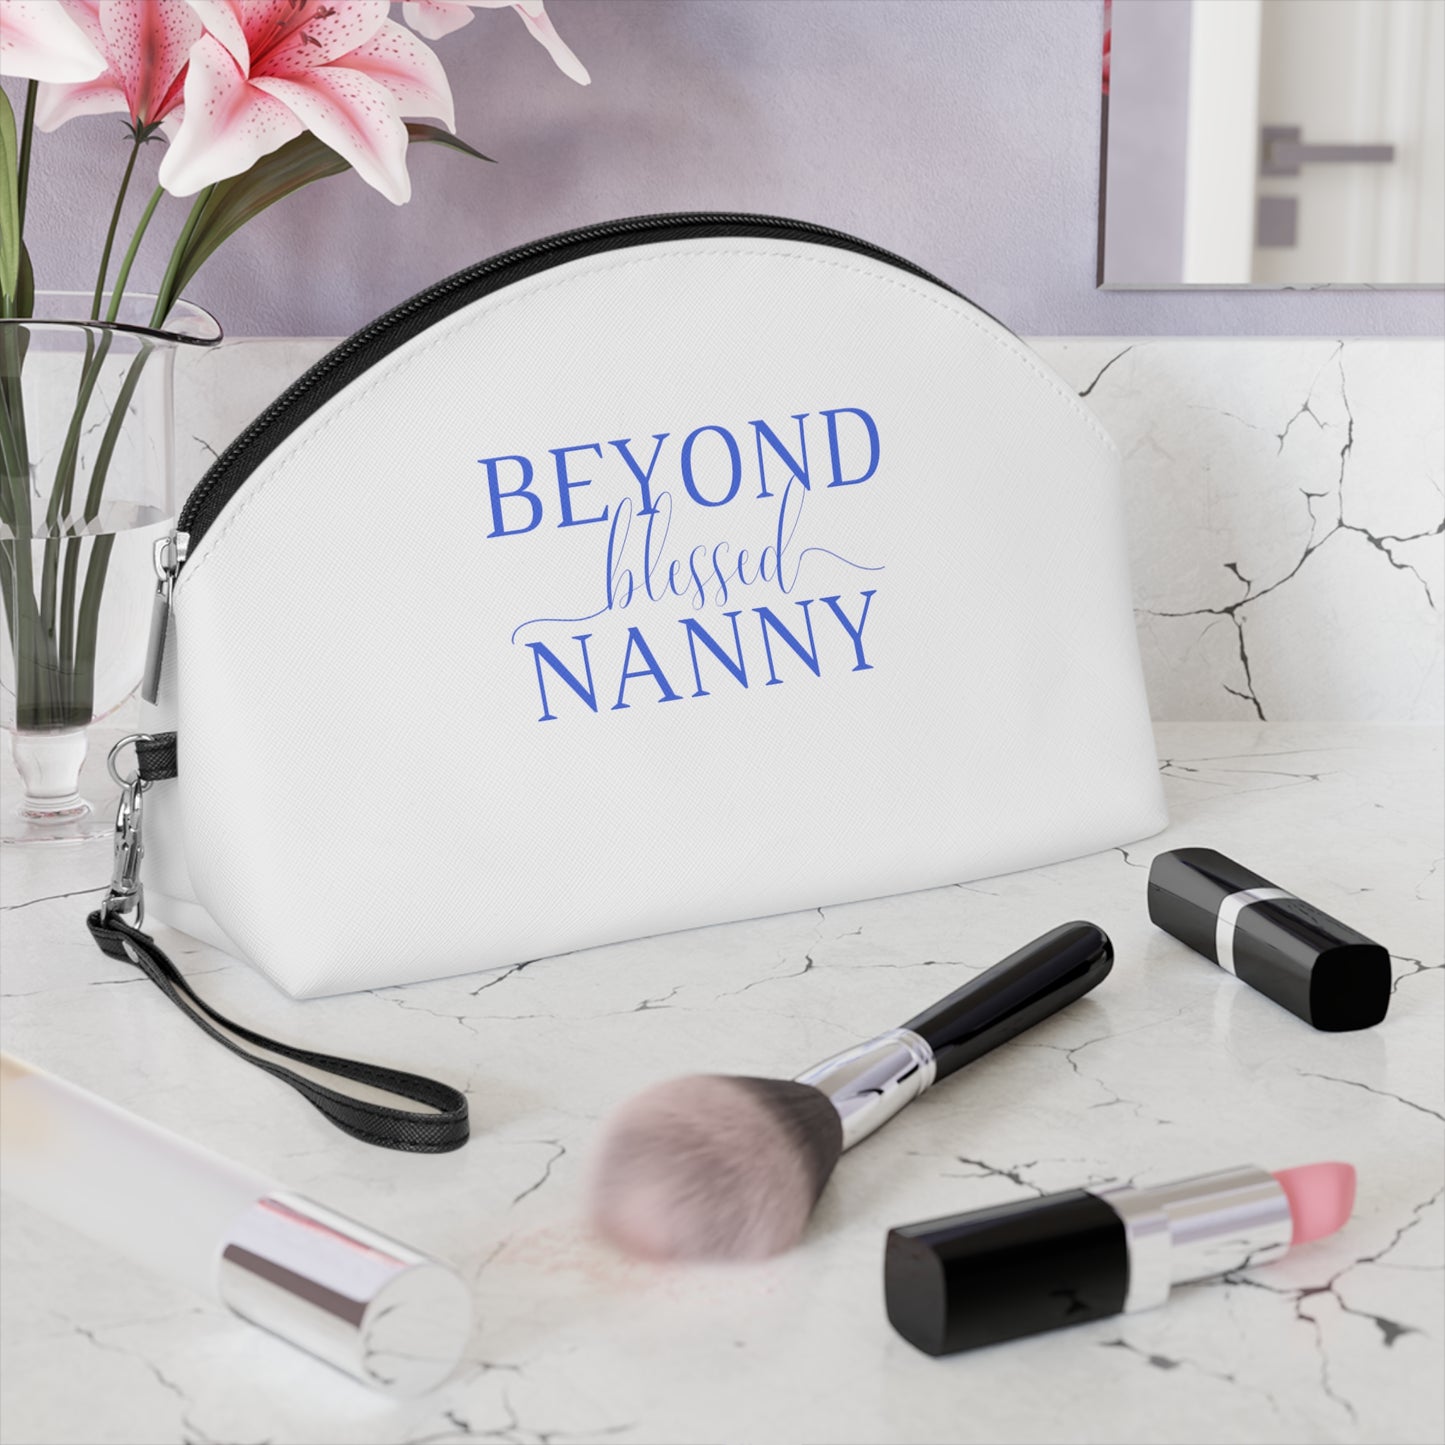 Beyond Blessed Nanny - Makeup Bag - Royal Blue